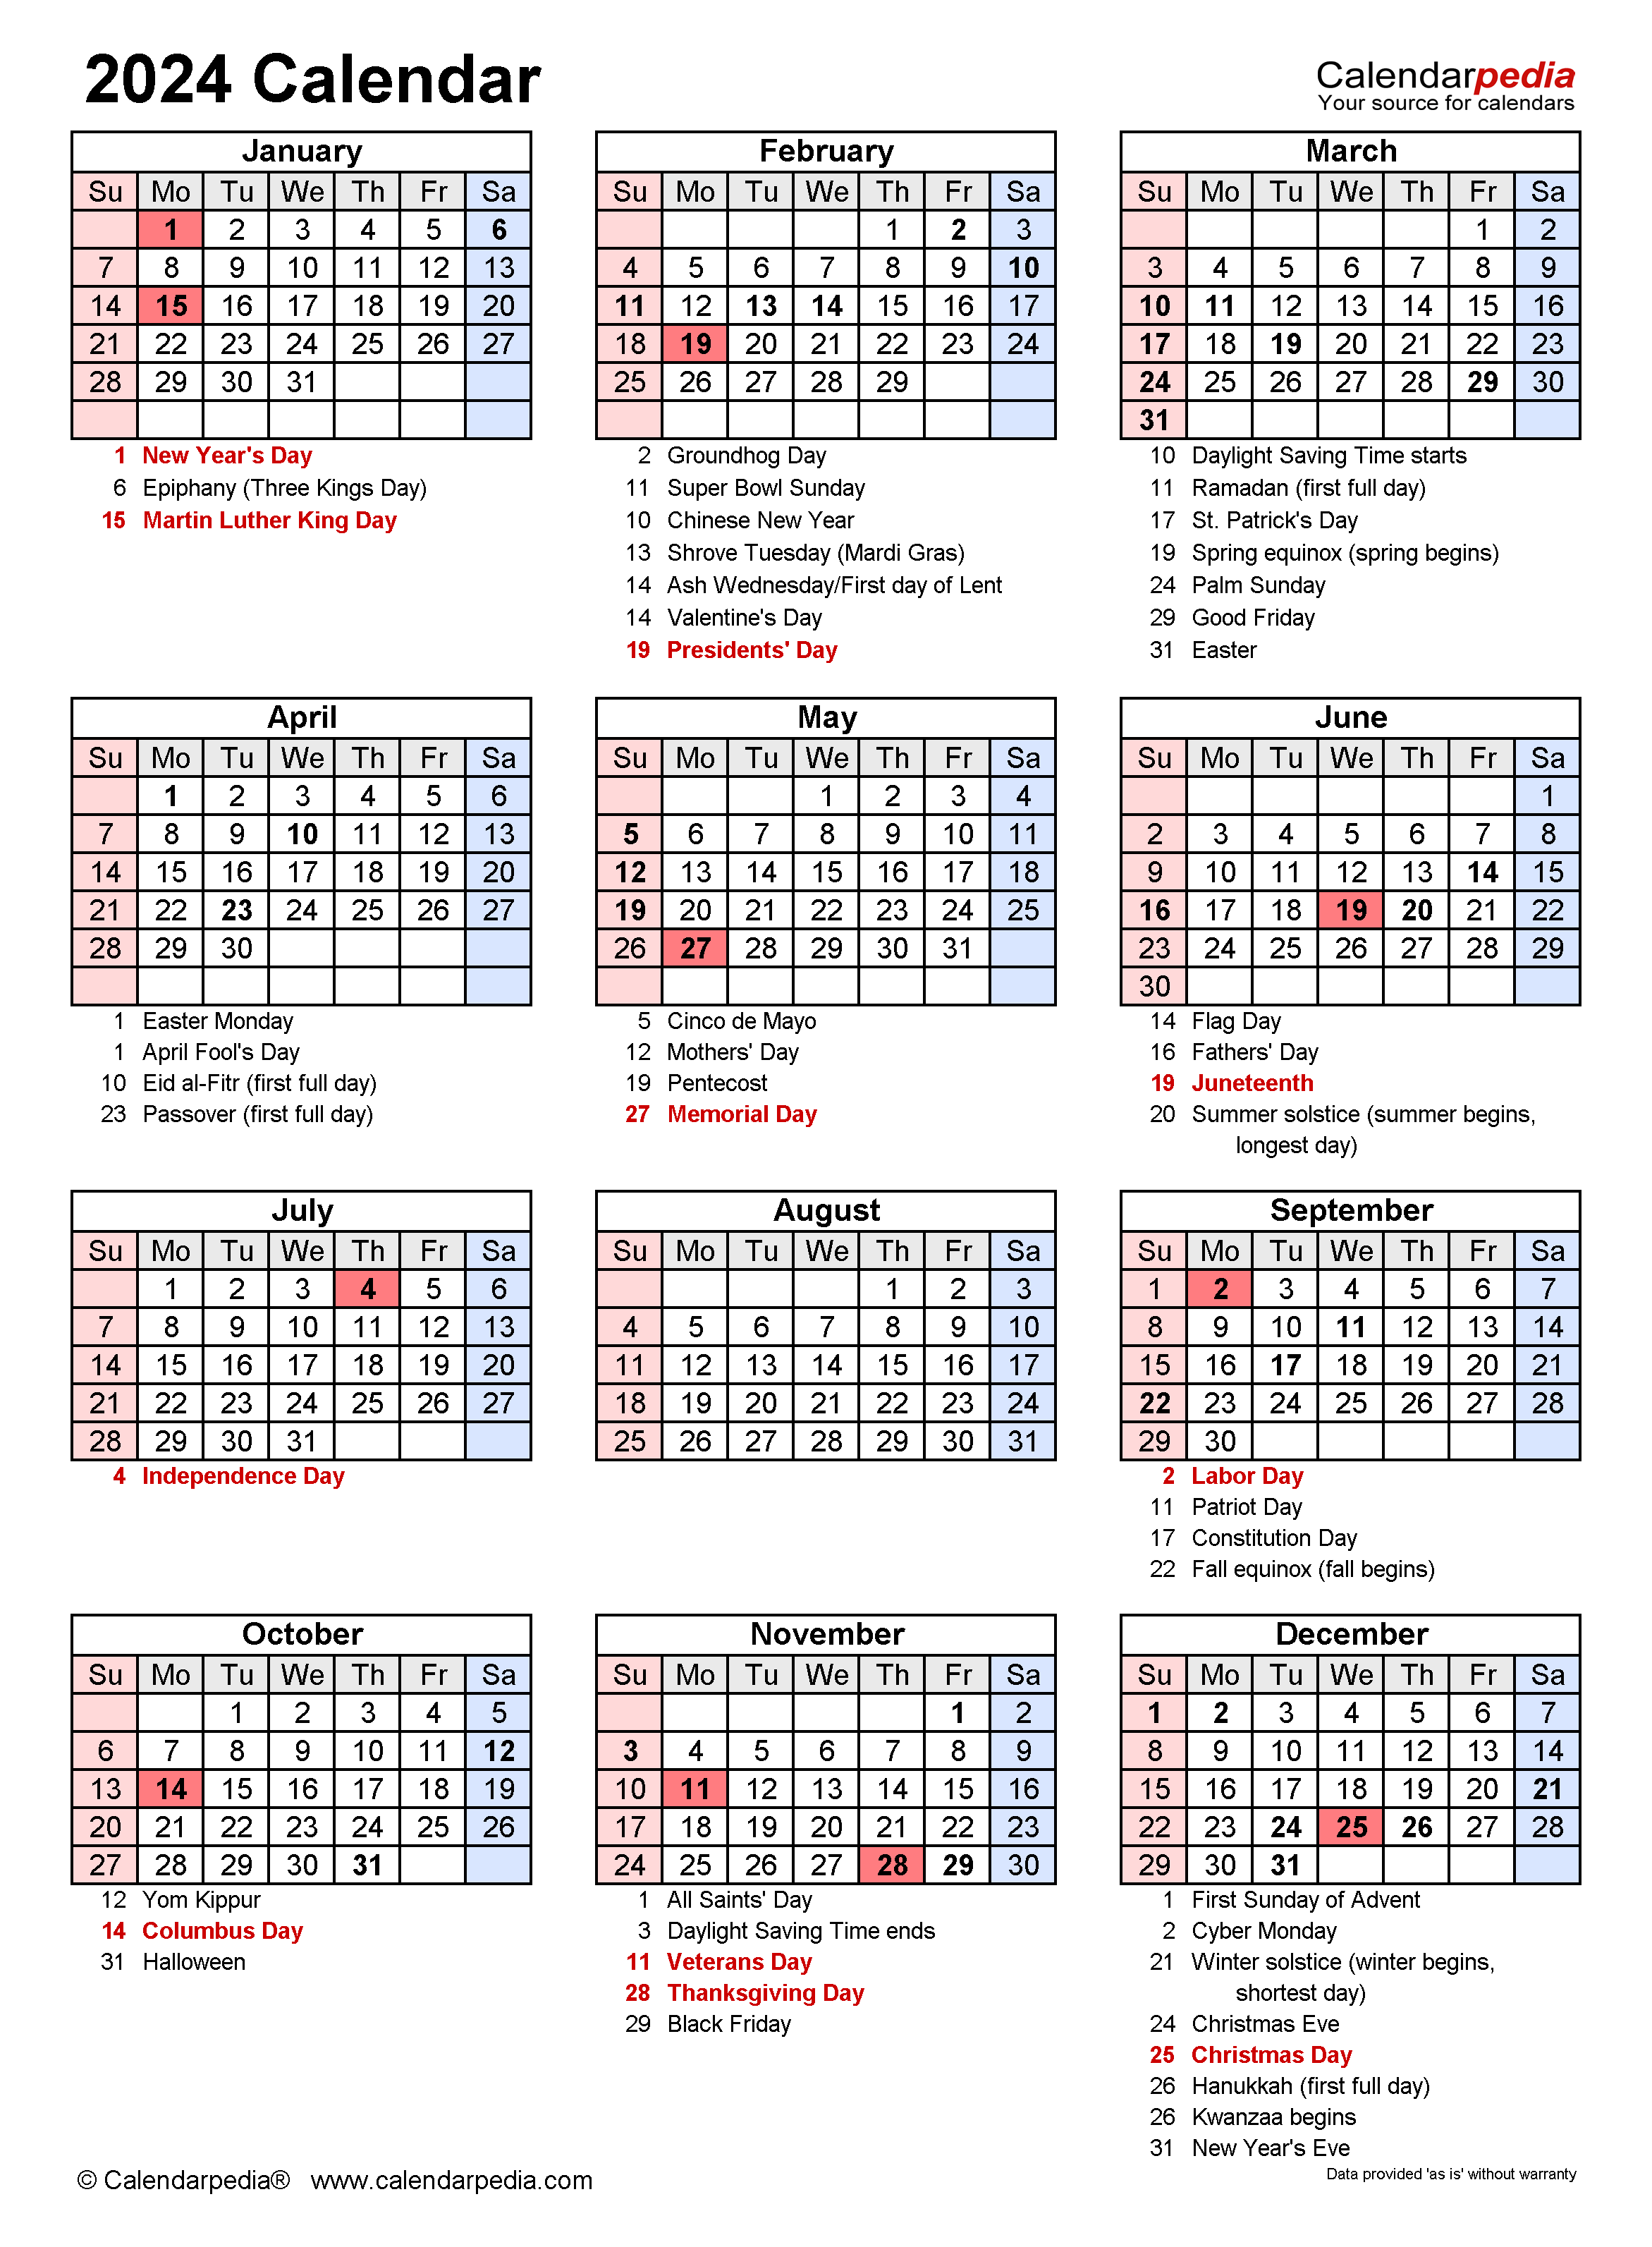 2024 Calendar Free Printable PDF Templates Calendarpedia | Free Printable 2024 Calendar On One Page With Holidays